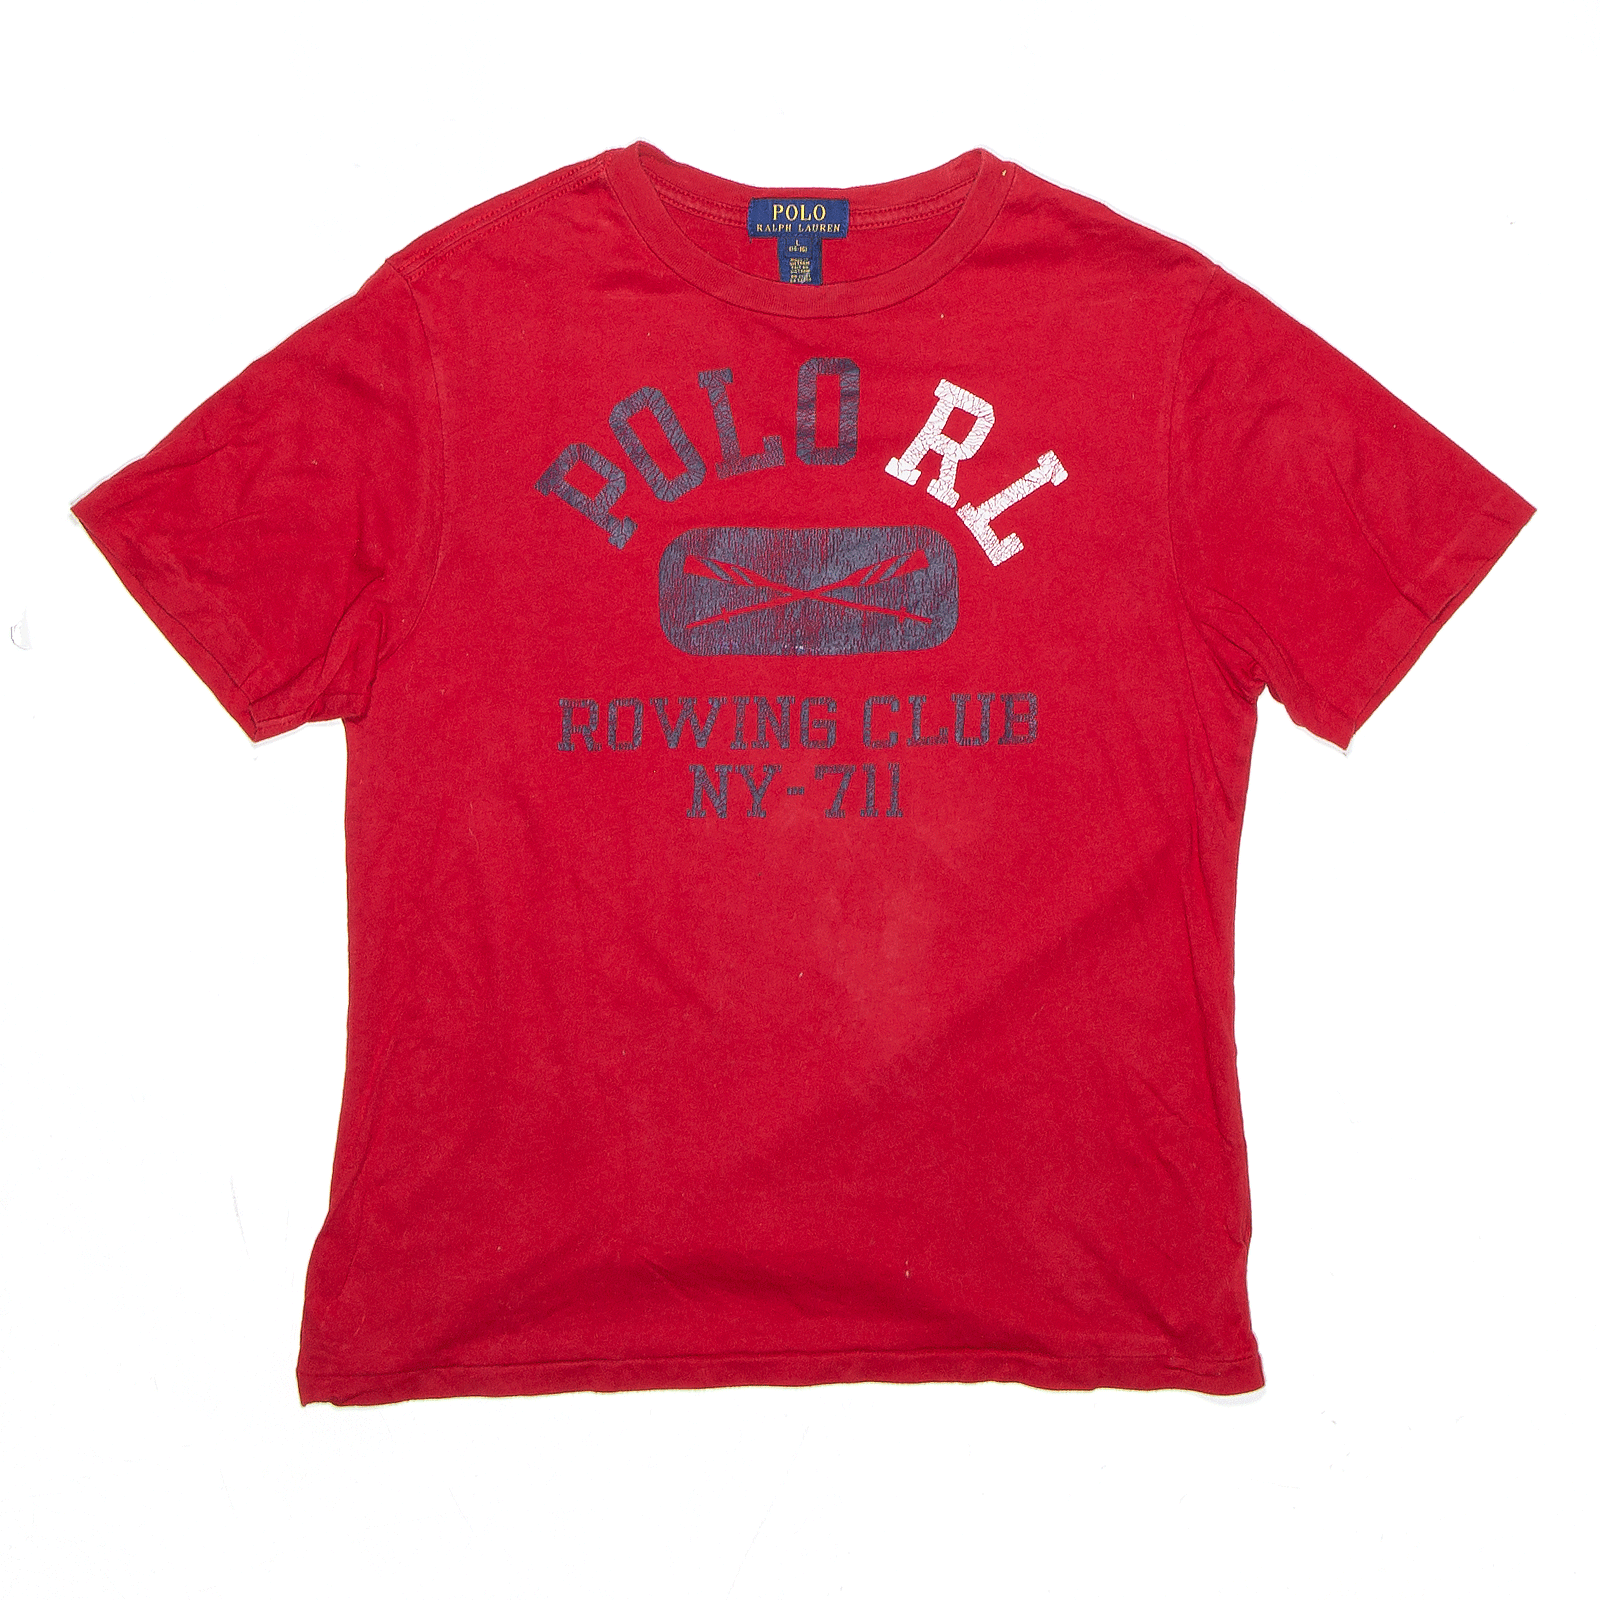 POLO RALPH LAUREN Rowing Club New York Red USA Short Sleeve T-Shirt Boys L